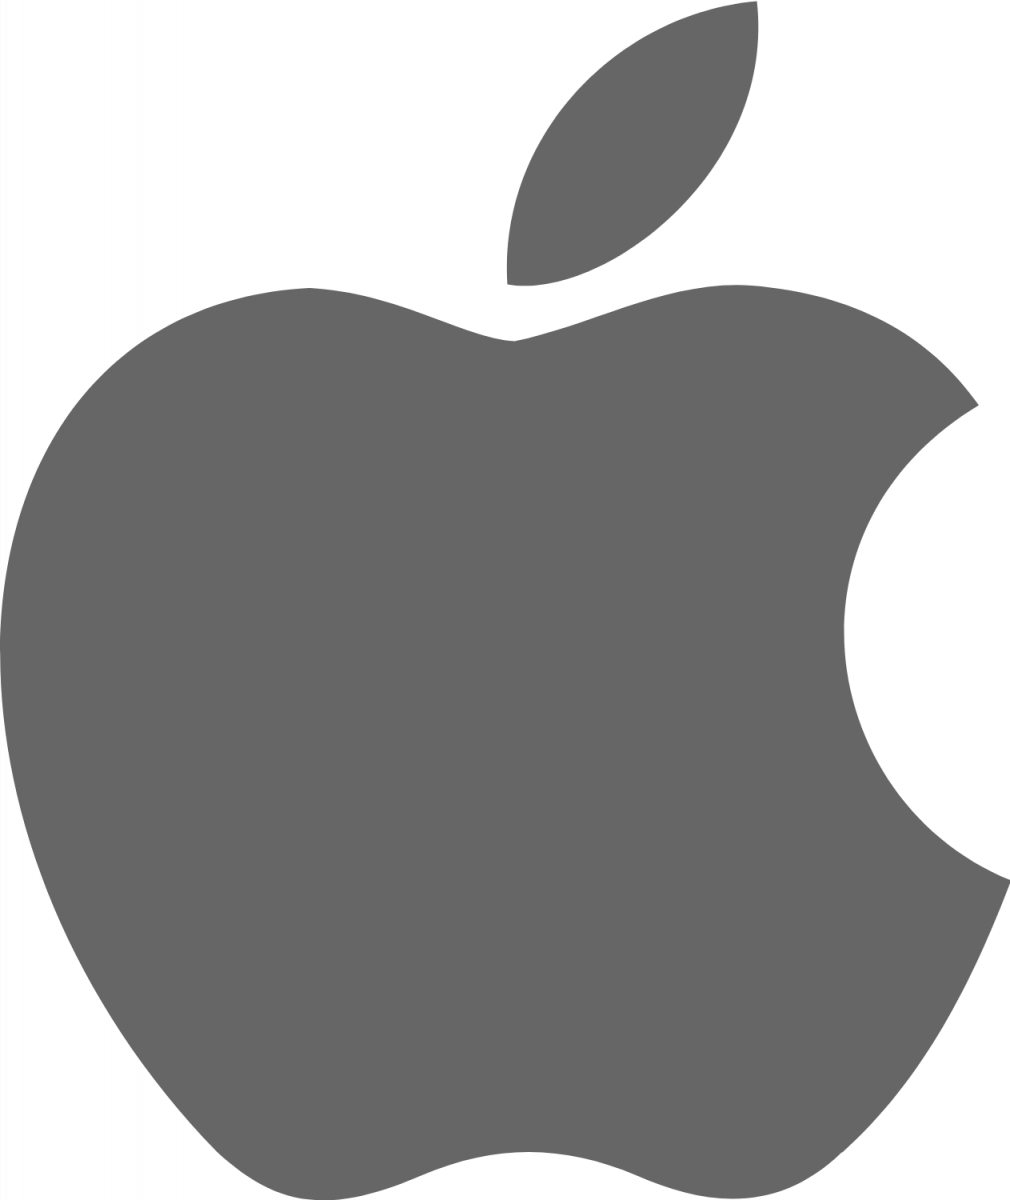 Apple Inc it companies in Srinagar